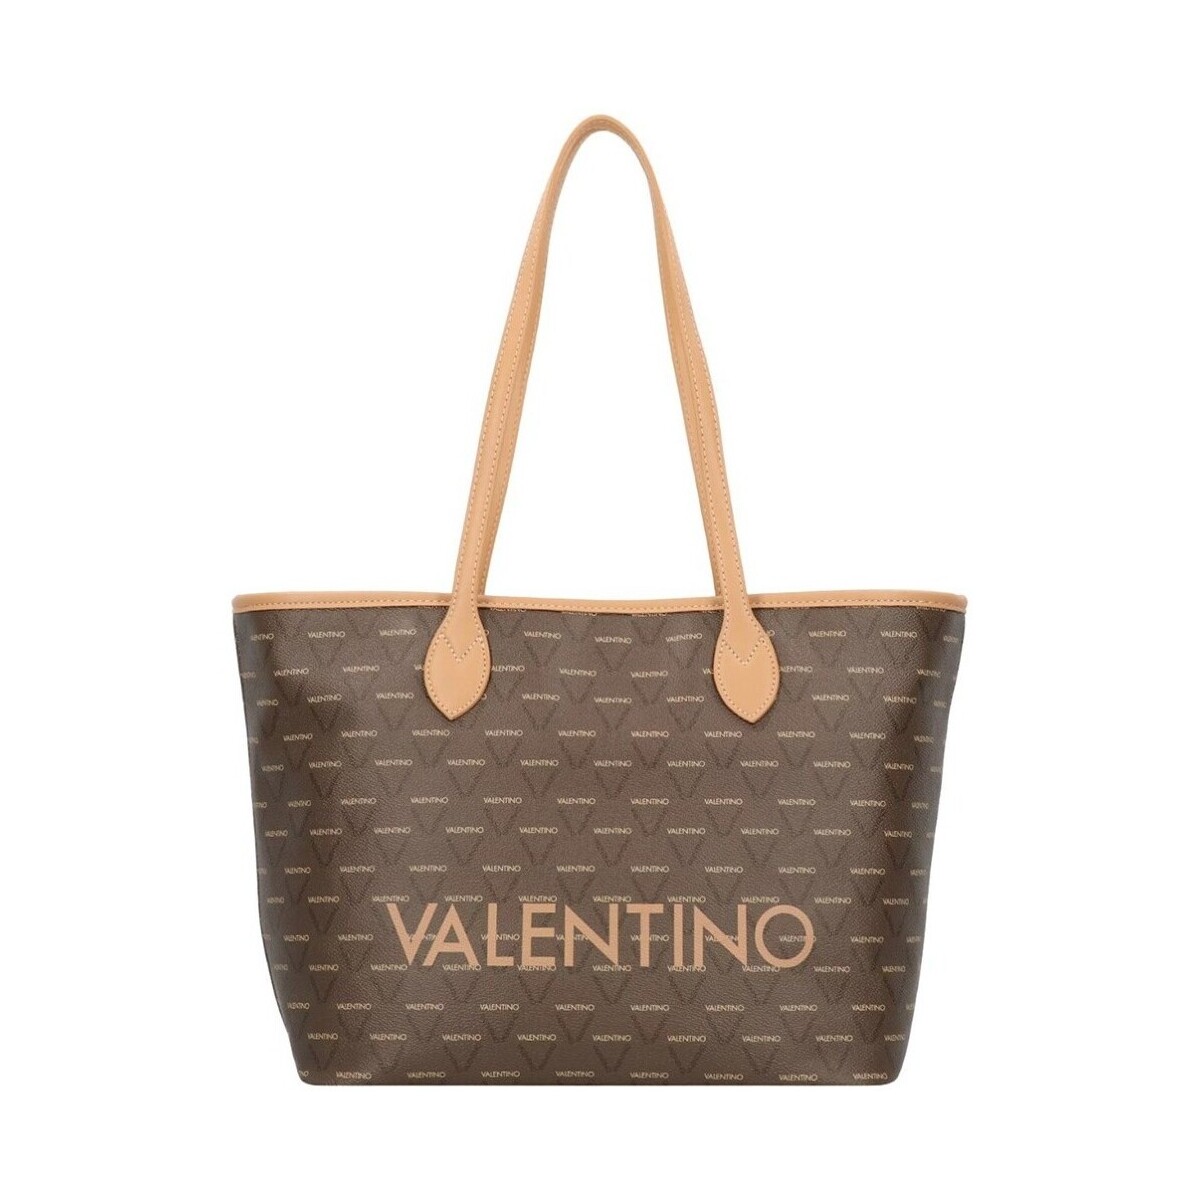 Tassen Dames Handtassen kort hengsel Valentino Handbags VBS3KG01R E76 Brown